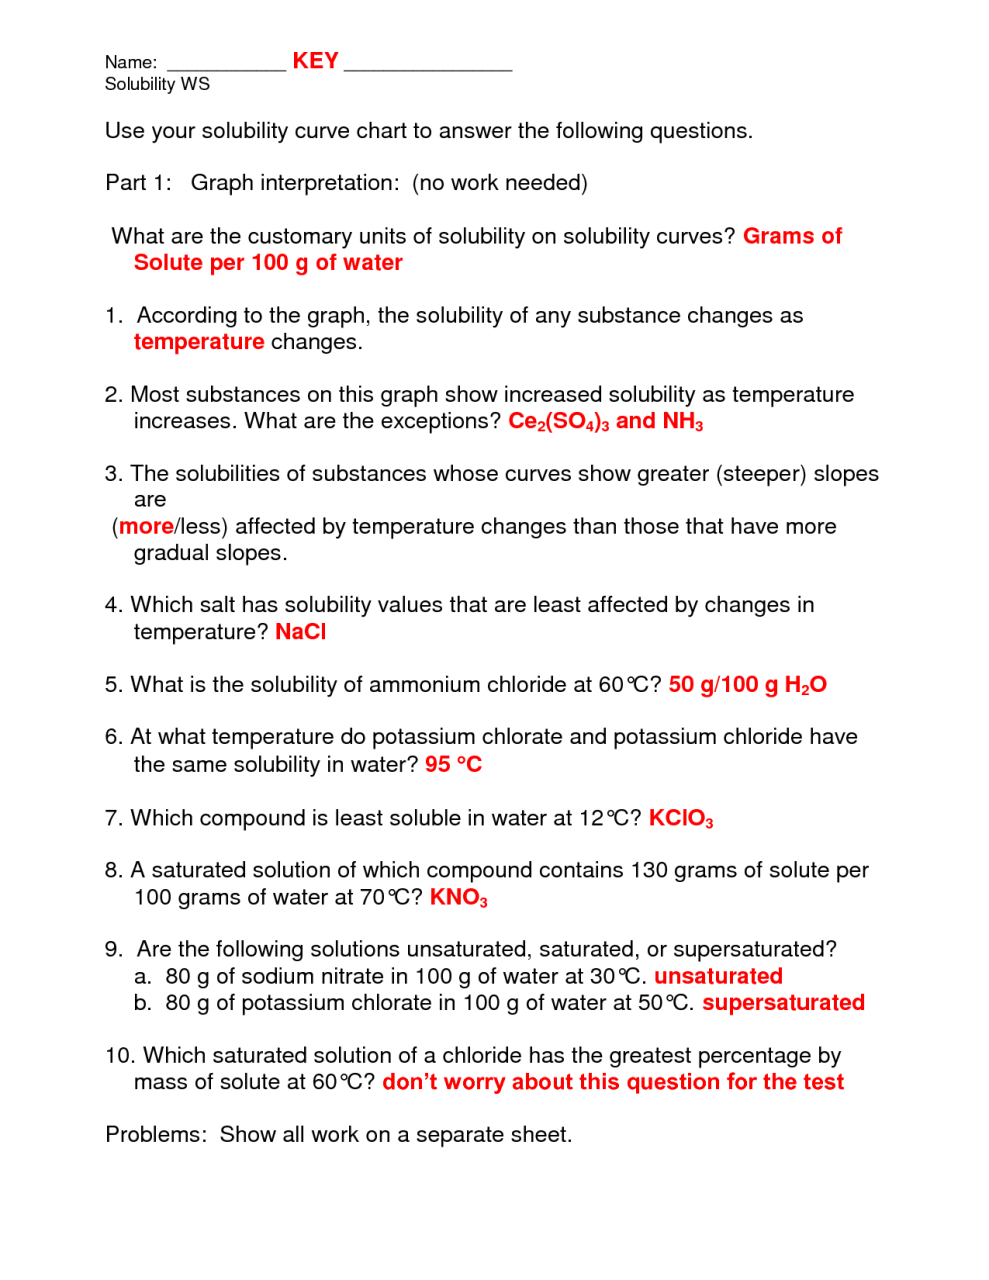 Angle Relationships Worksheet #2 Answer Key Pdf